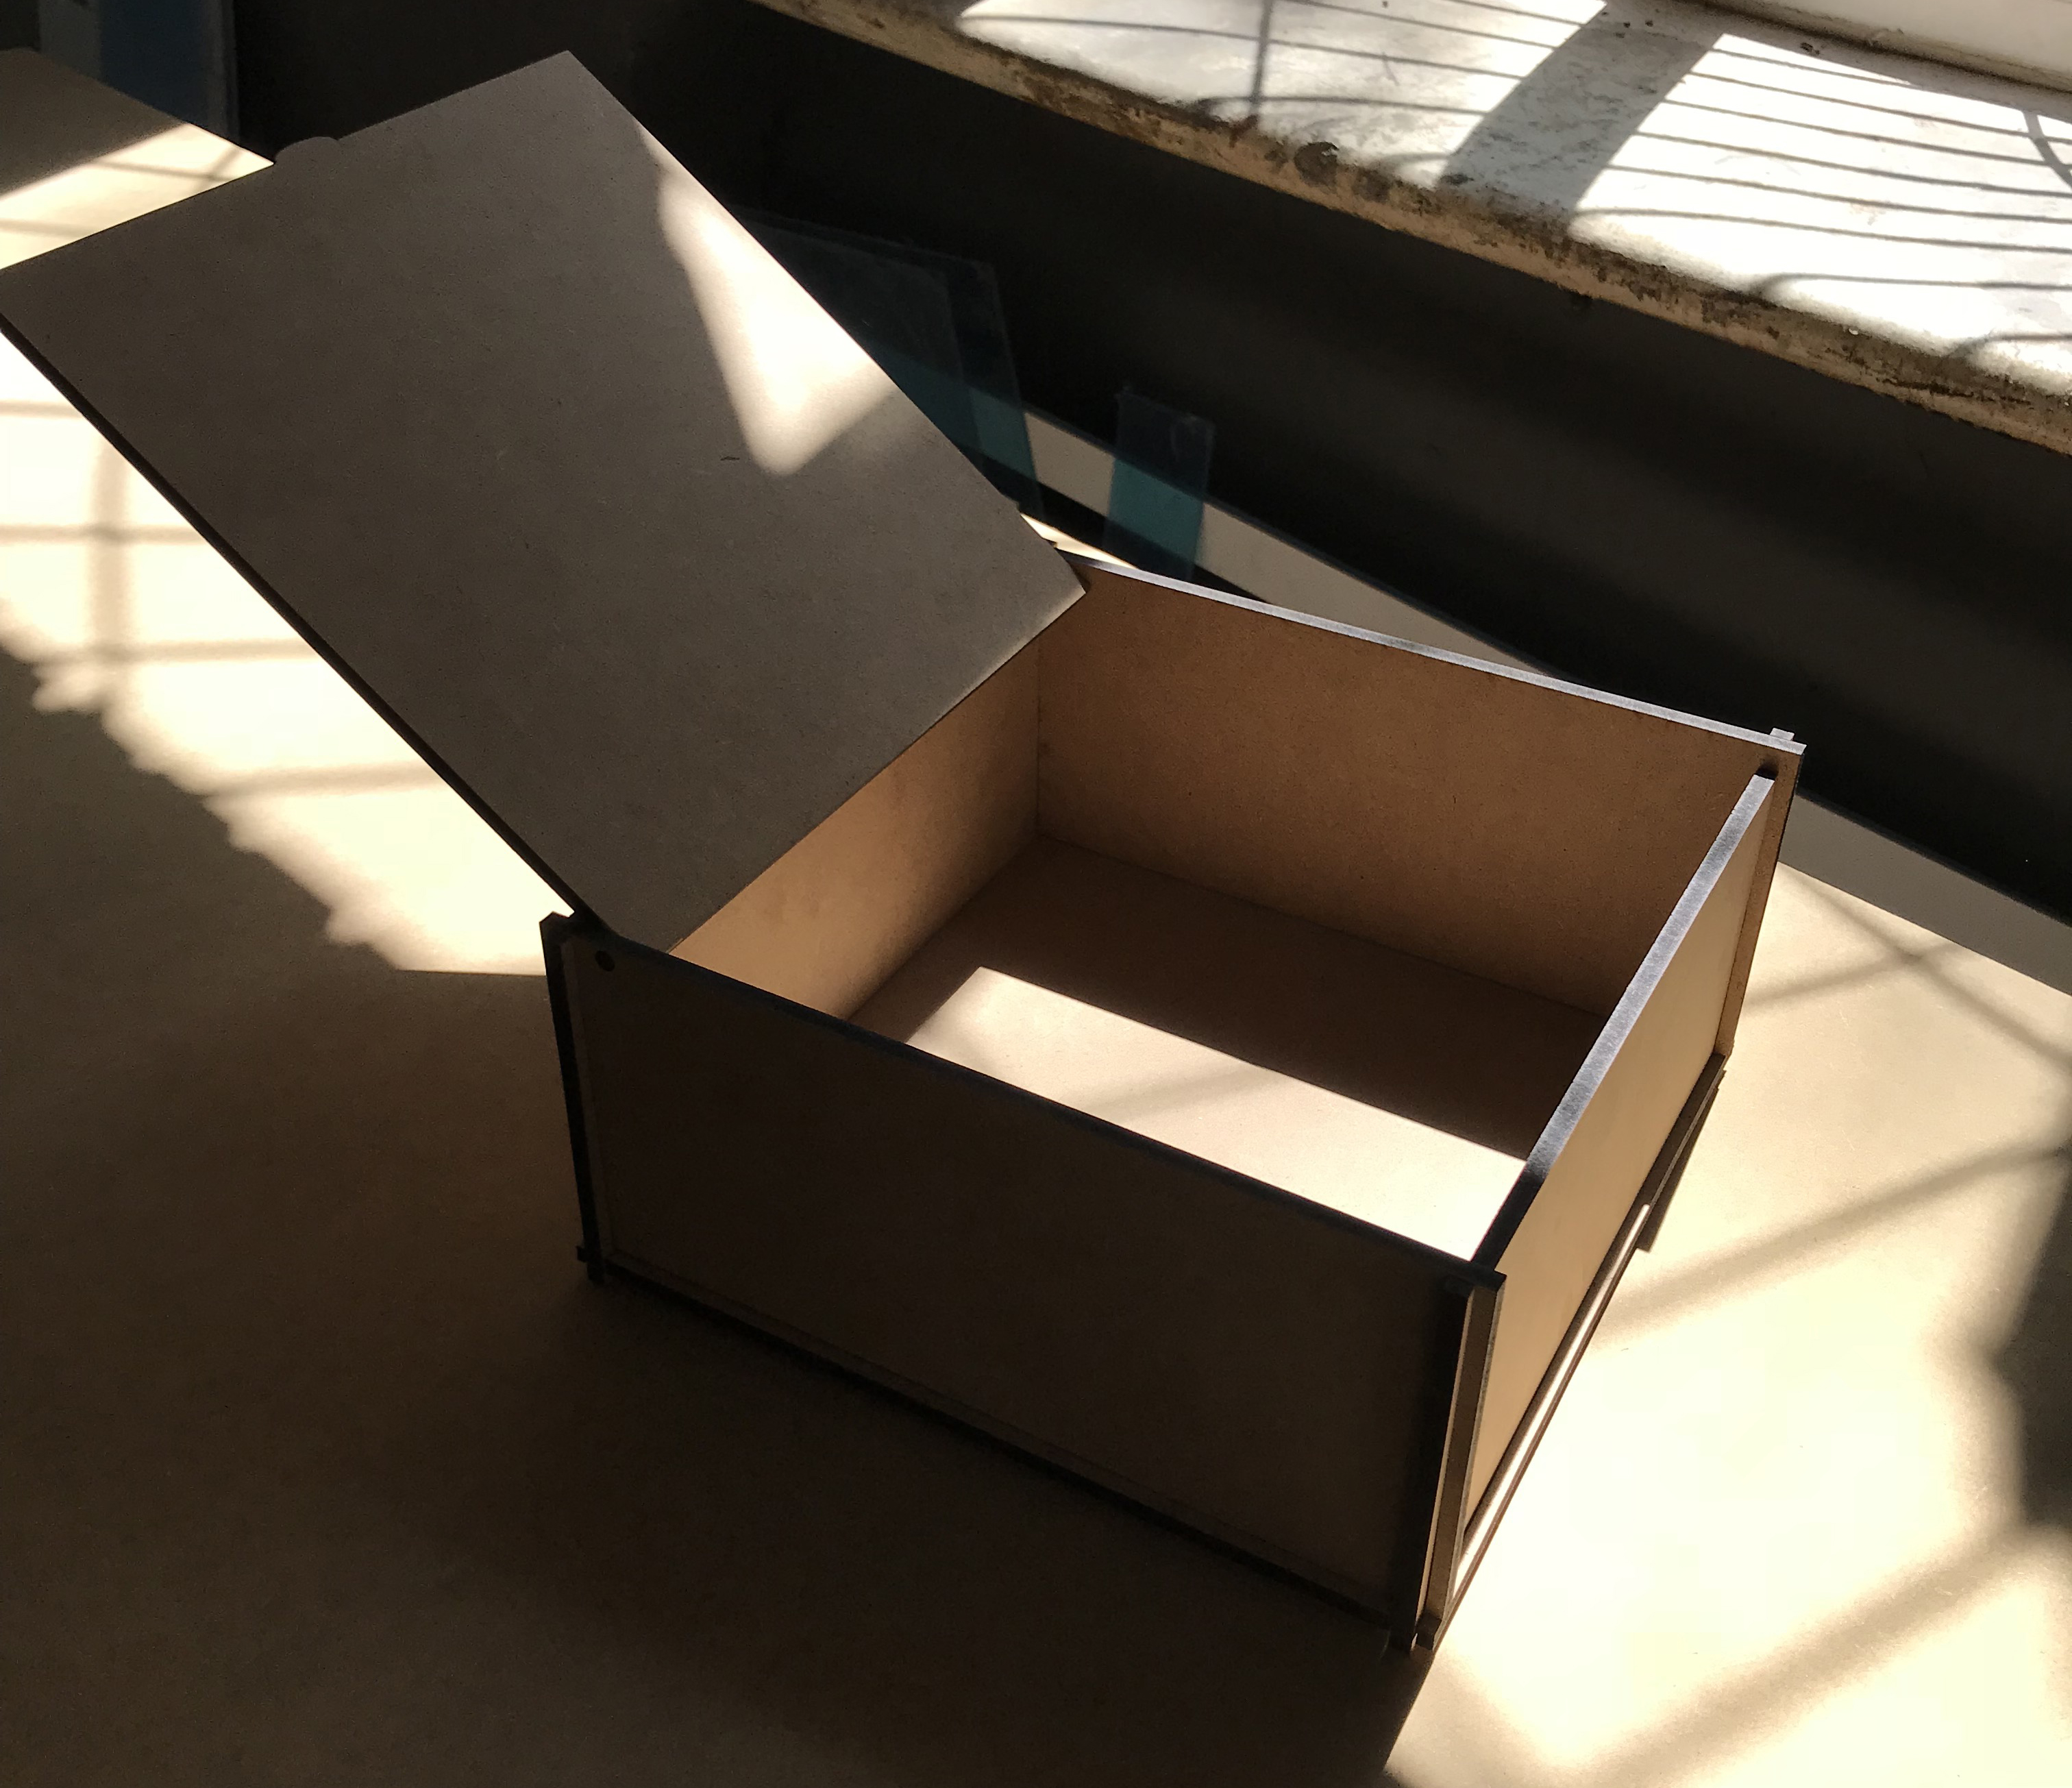 30 на 30 на 20 см - коробка для ваших подарков